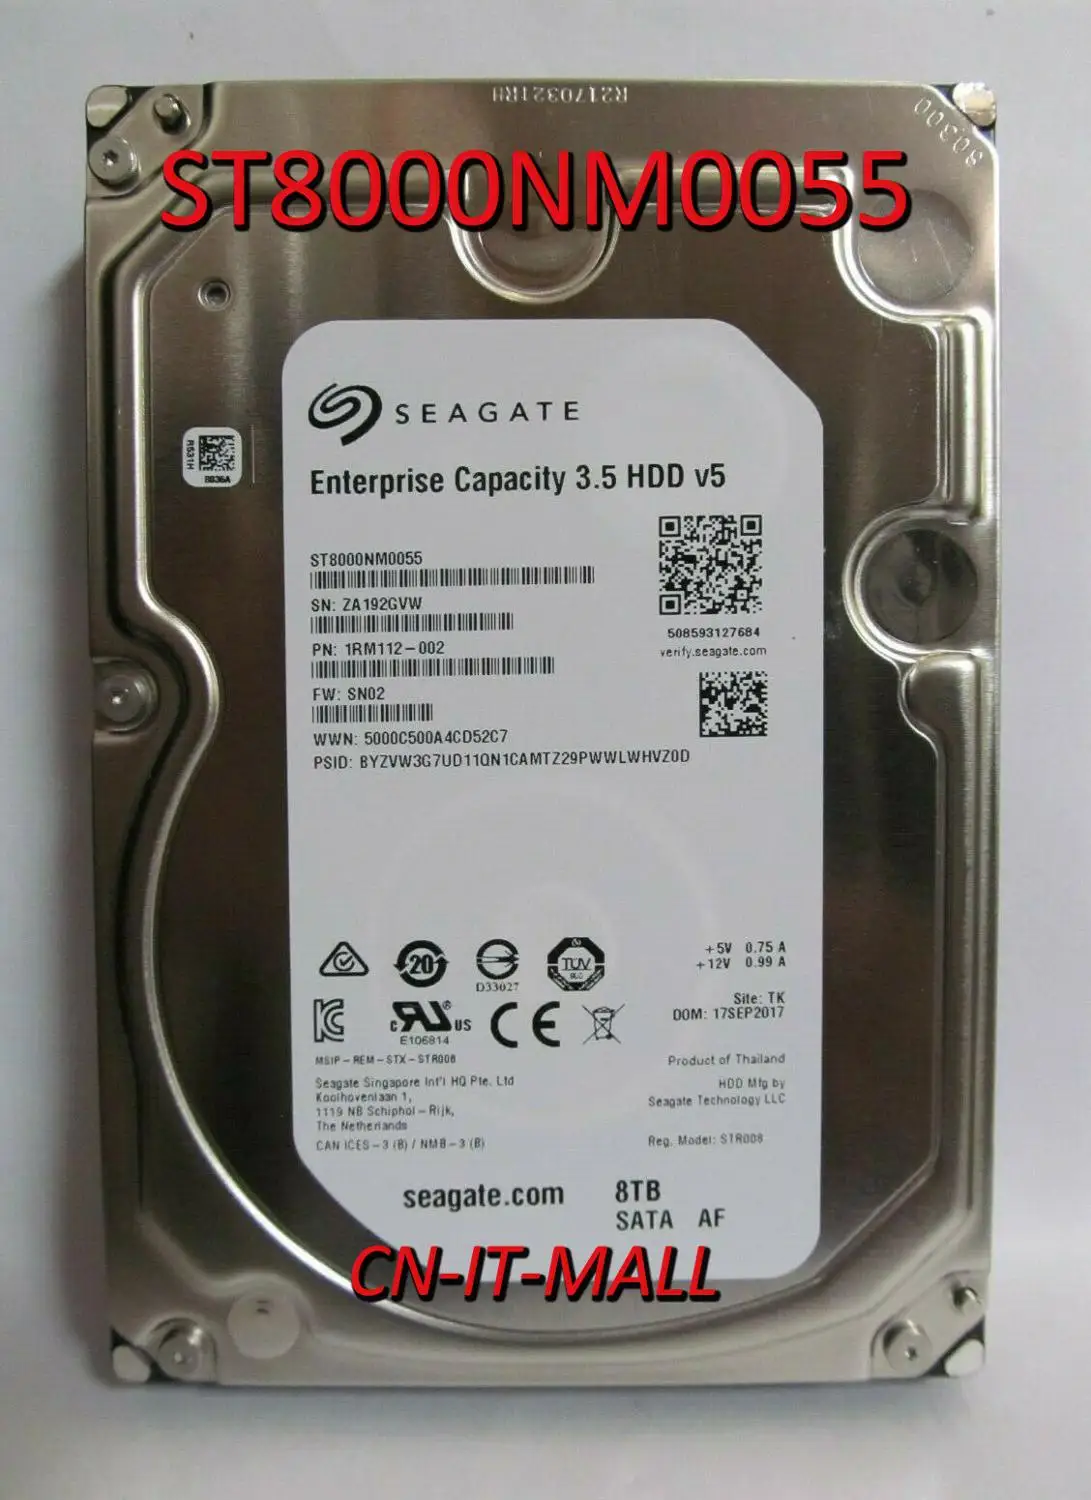 

Seagate Exos ST8000NM000A ST8000NM0055 8TB 7200 RPM 512e SATA 6Gb/s 256MB Cache 3.5" Internal Enterprise Hard Drive